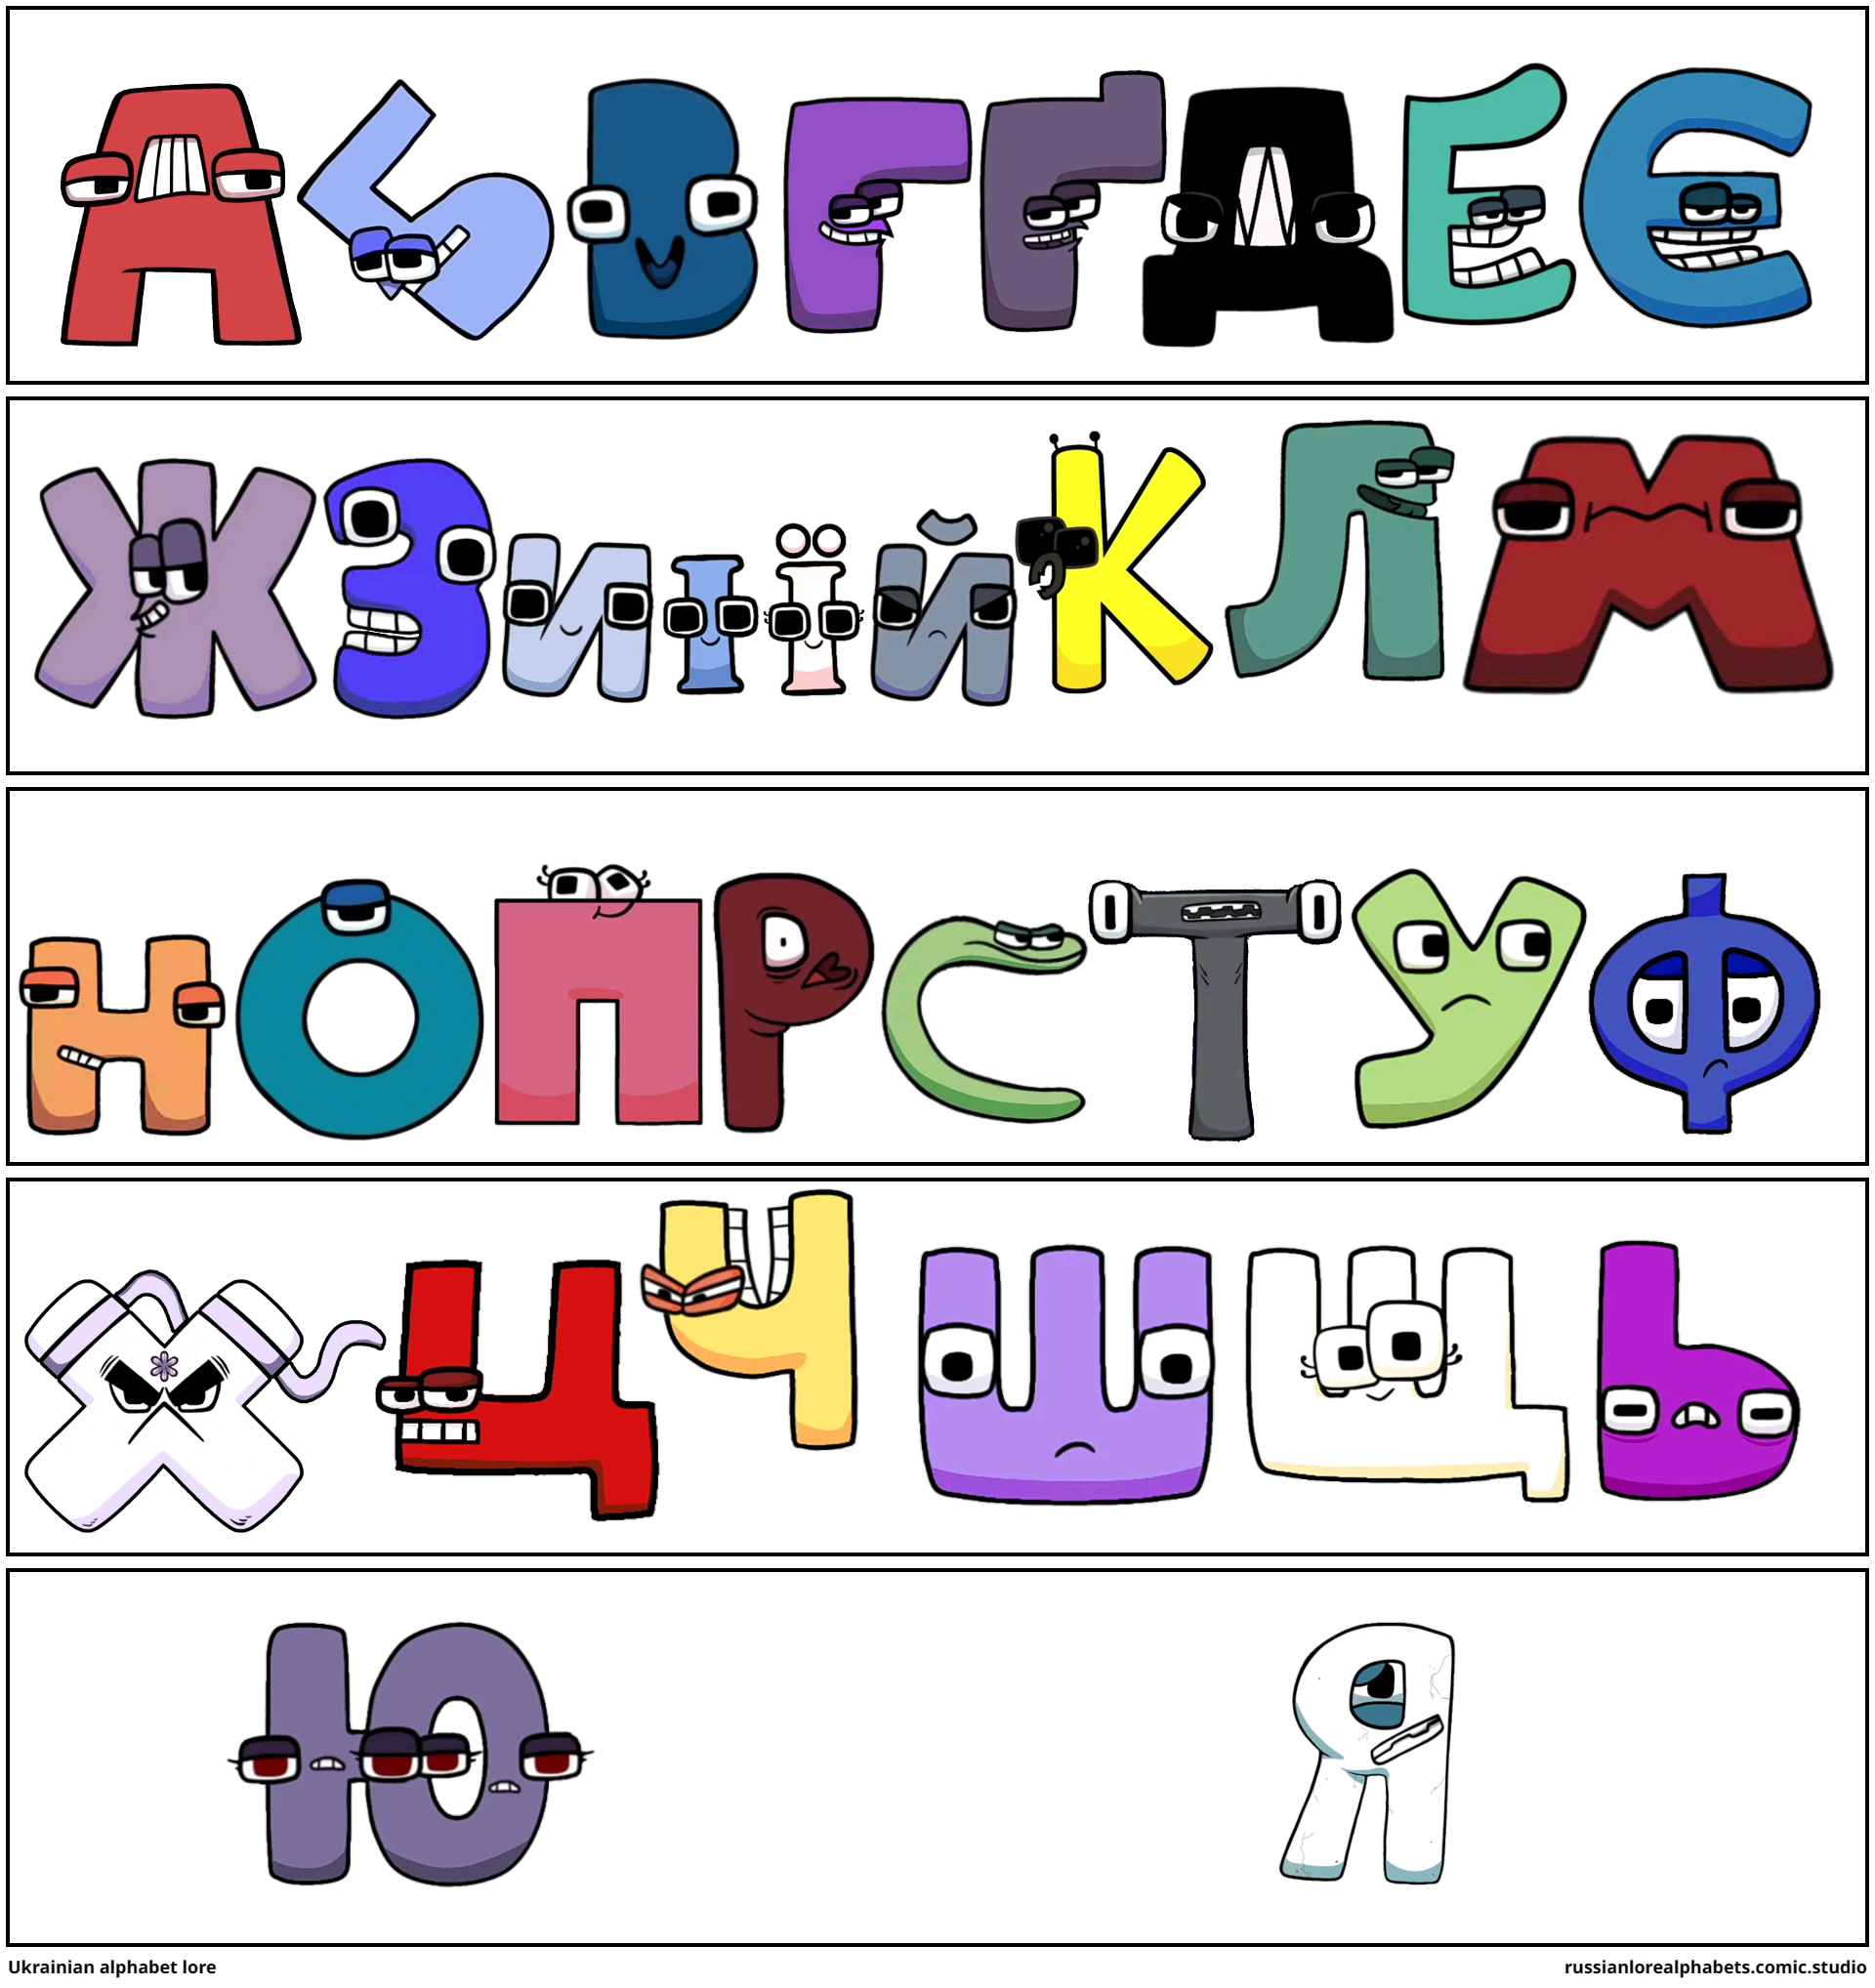 Ukrainian alphabet lore (credit: pauloluigi) - Comic Studio